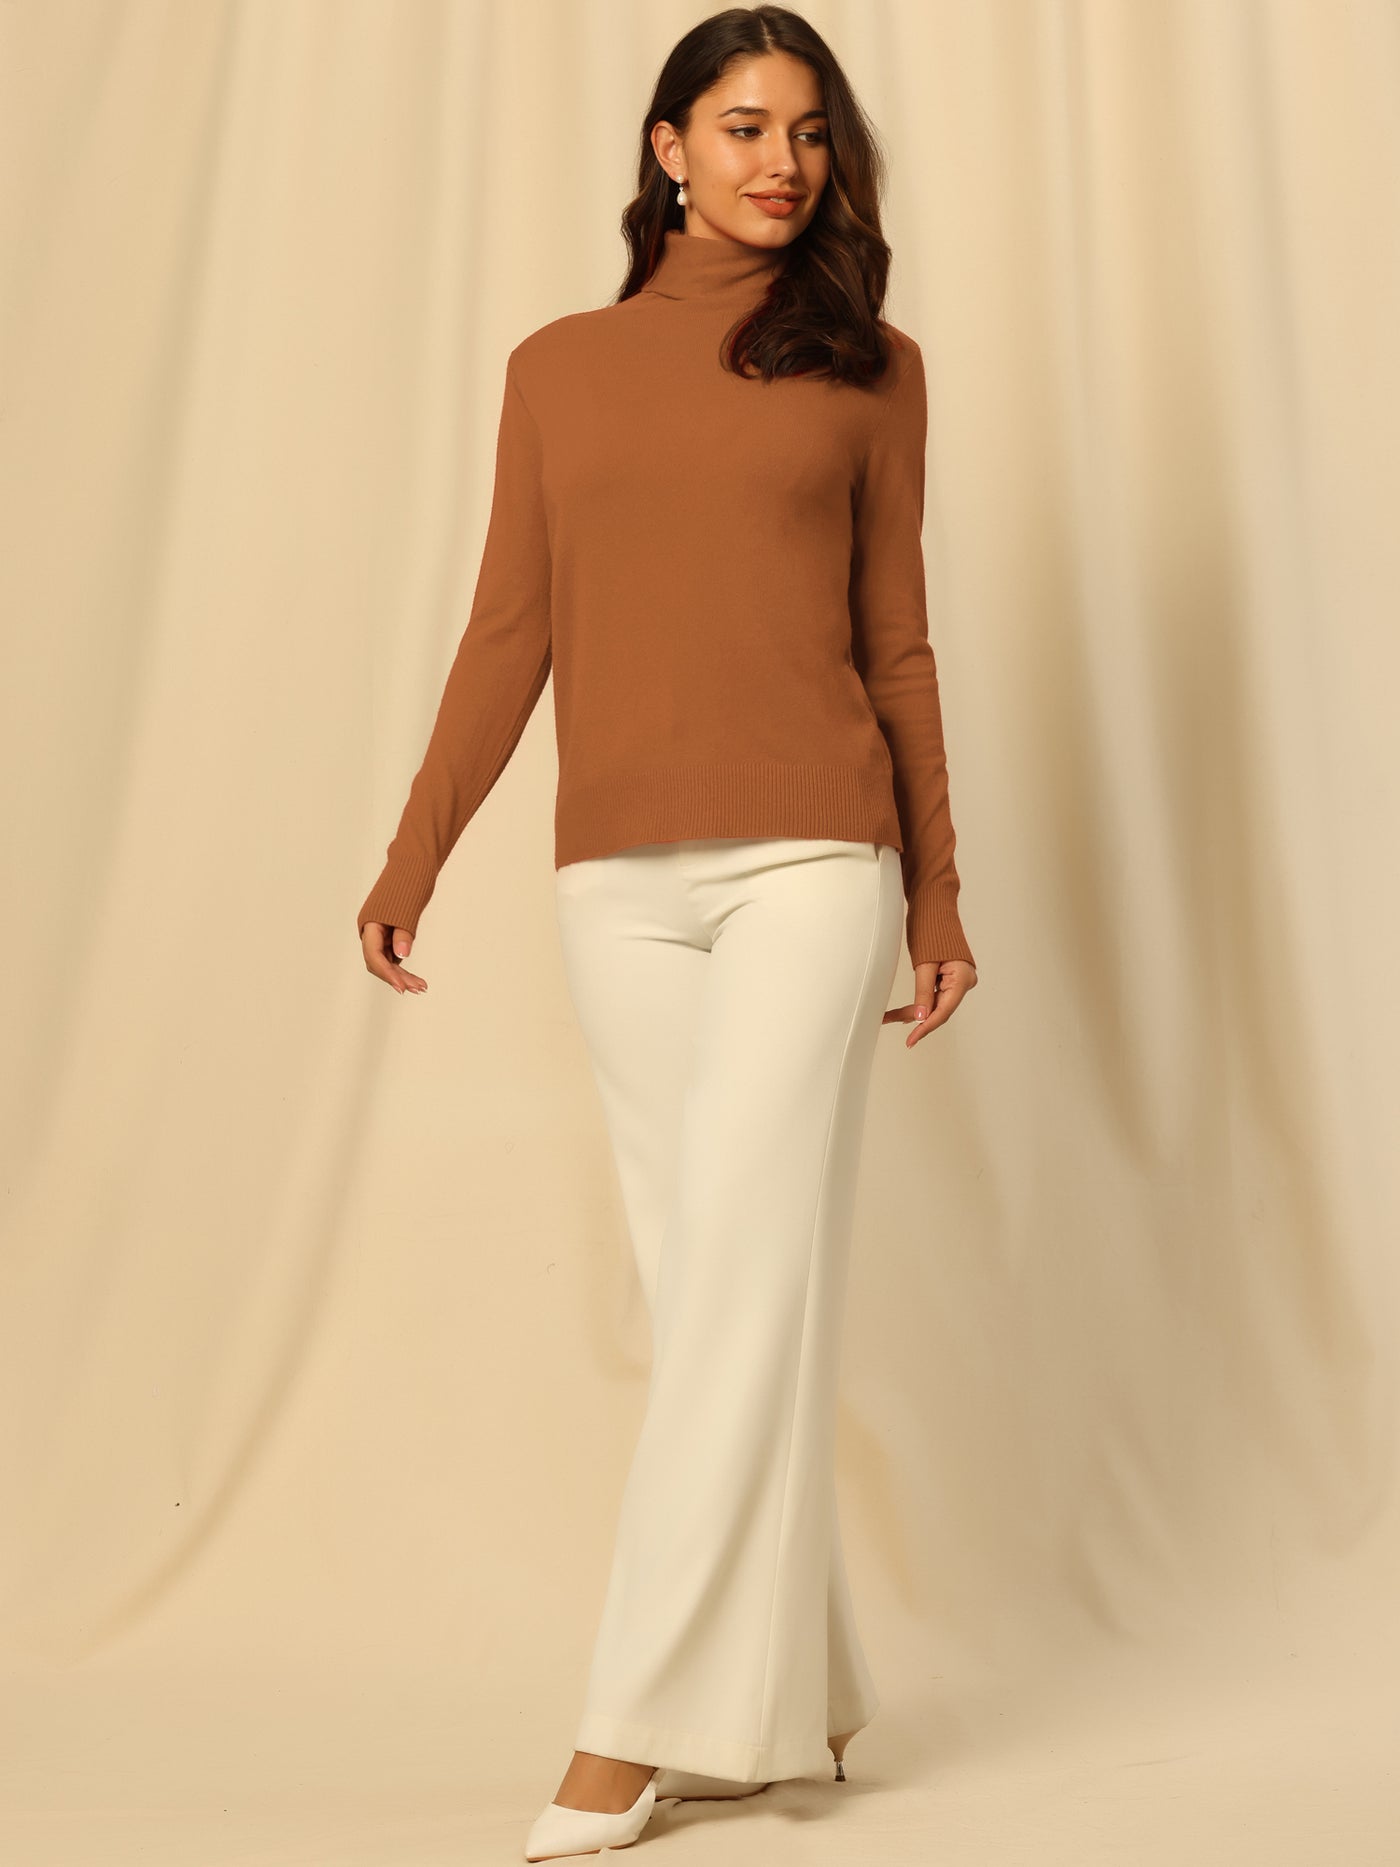 Bublédon Women's Pullover Sweater Top Long Sleeve Turtleneck Knit Tops